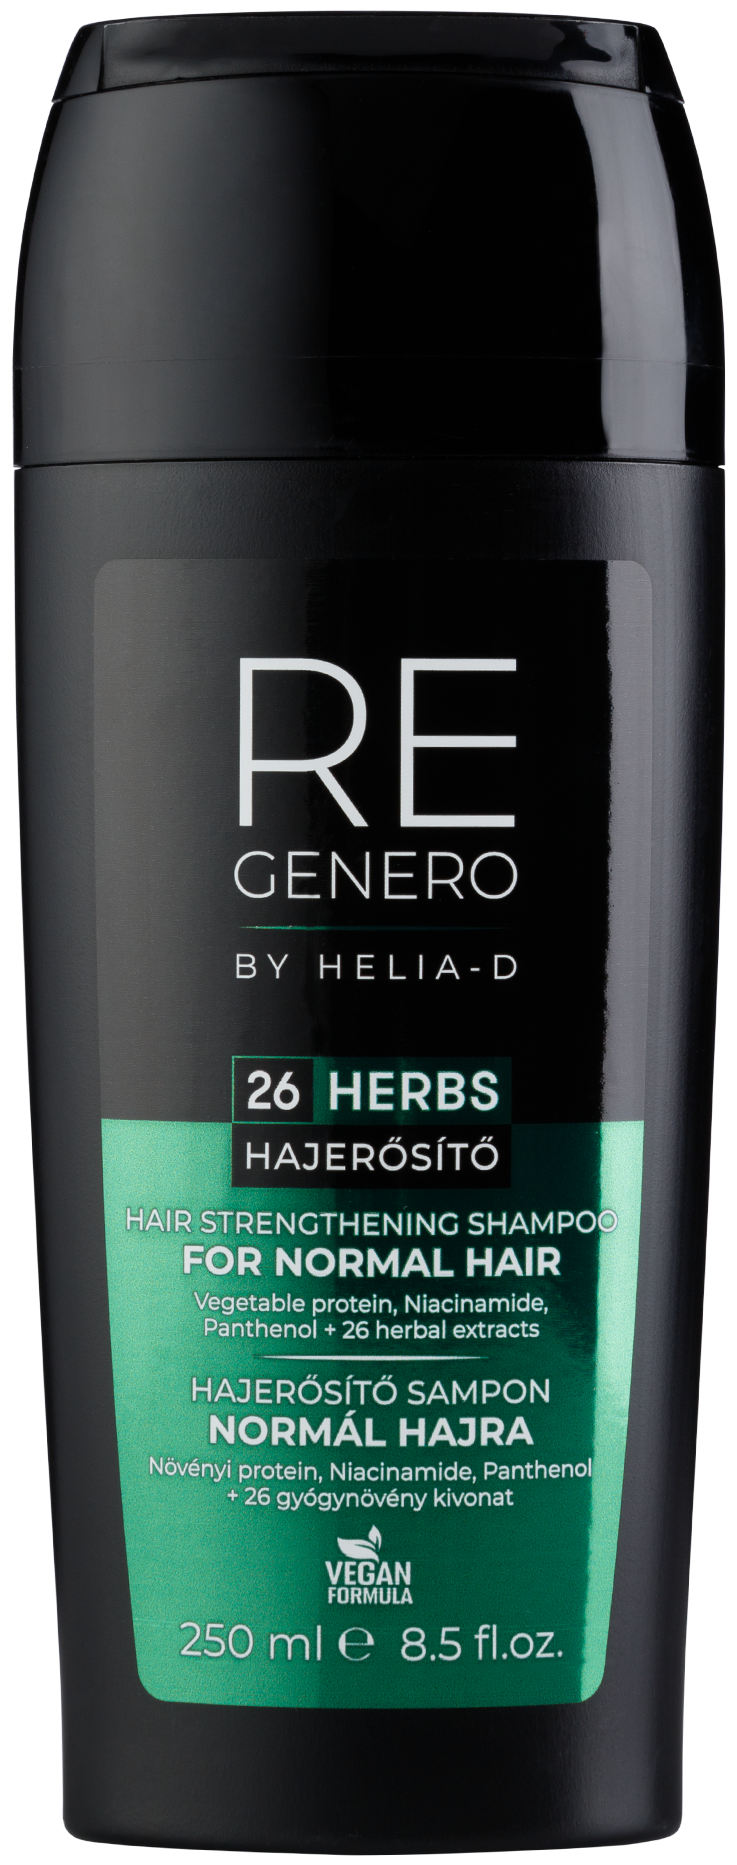 Helia-D Regenero Hair Strenghtening Shampoo For Normal Hair